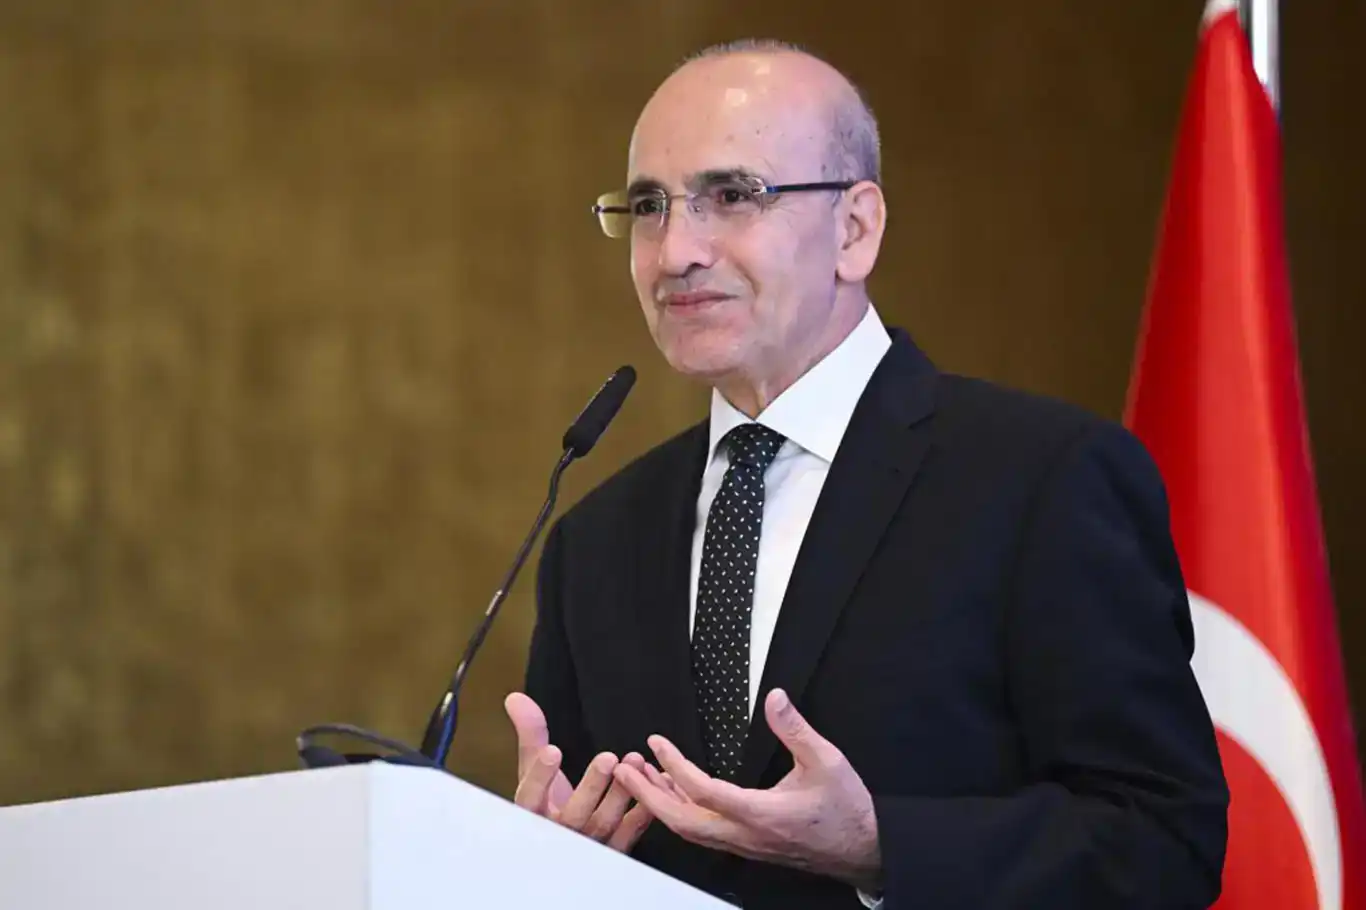 Türkiye removed from FATF grey list, announces Finance Minister